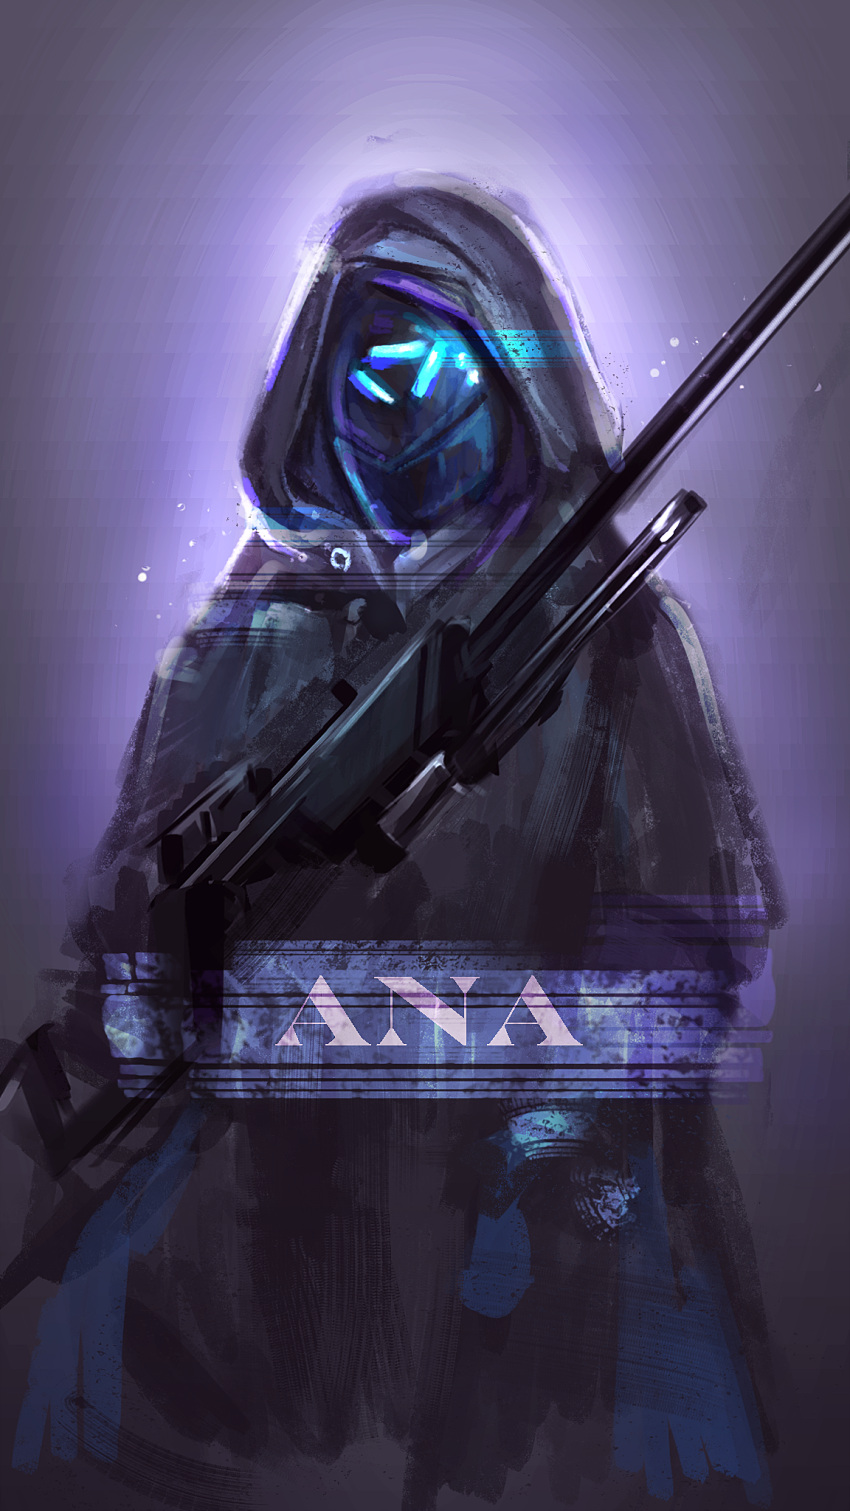 1girl alternate_costume ana_(overwatch) dark_background glowing gun hood mask overwatch pt. rifle sniper_rifle solo weapon